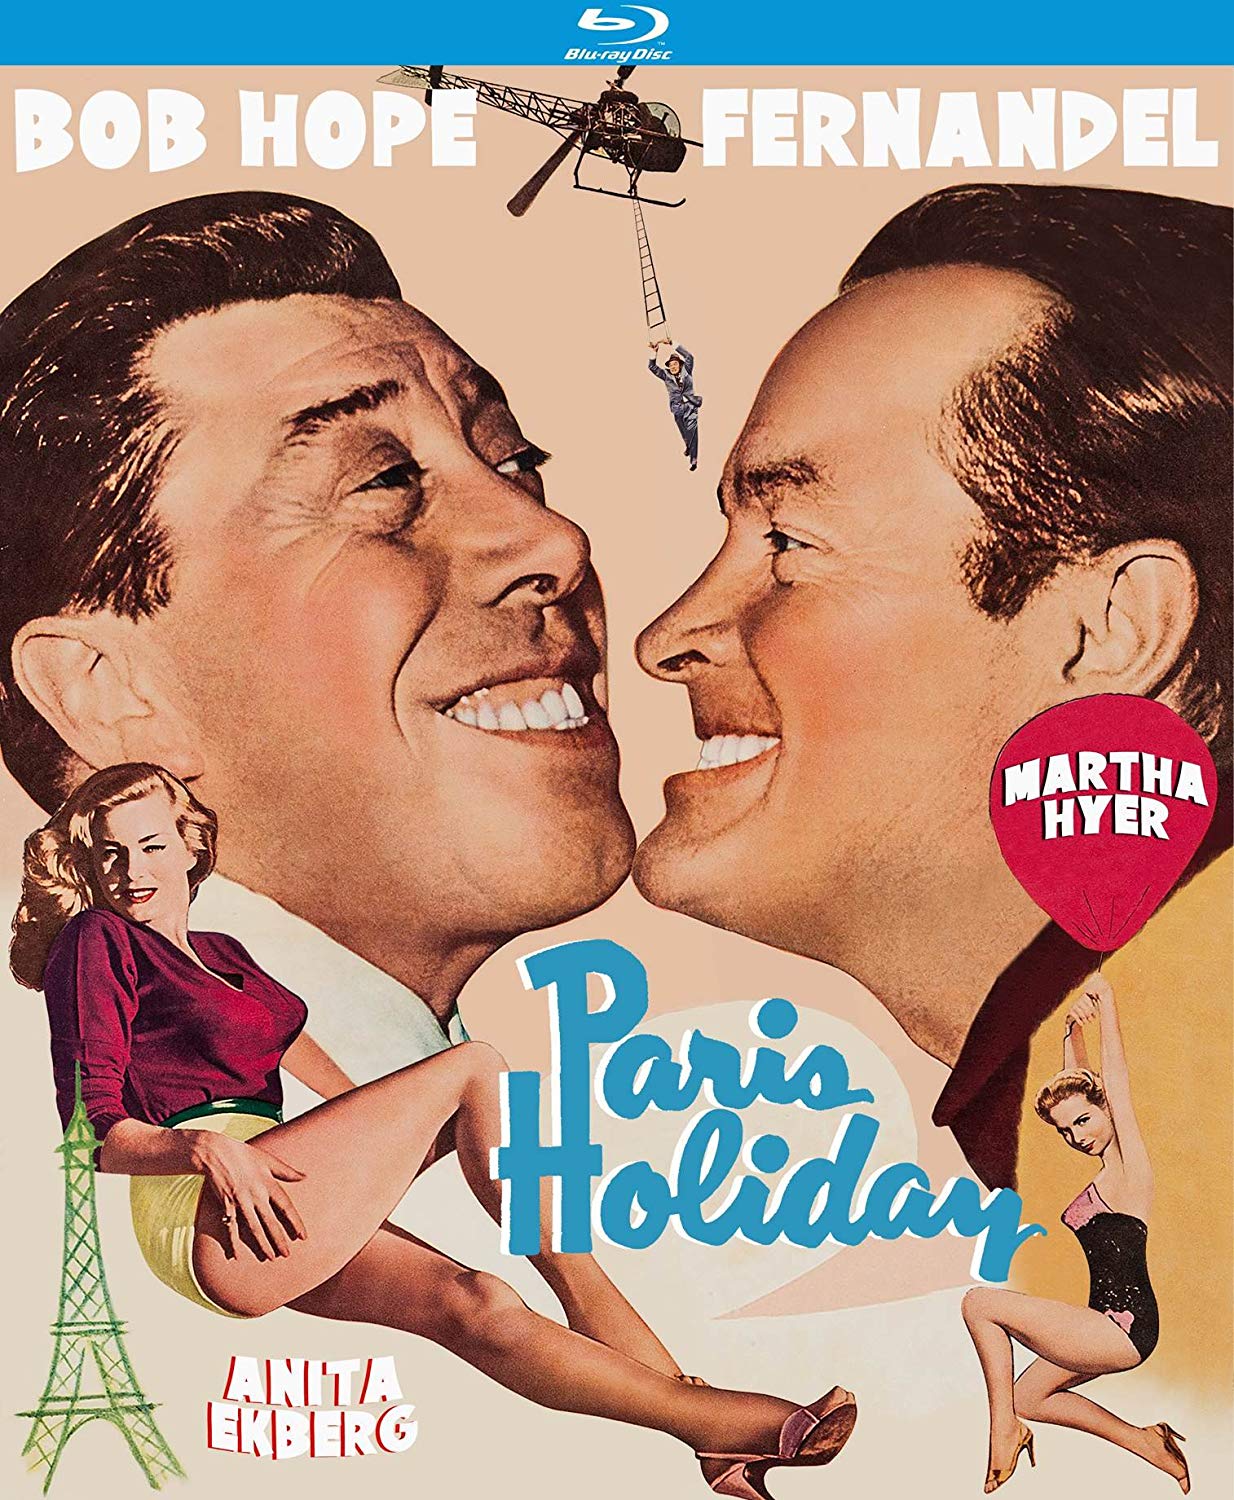 Paris Holiday (1958) starring Bob Hope, Martha Hyer, Anita Eckberg, Fernydel, Preston Sturges